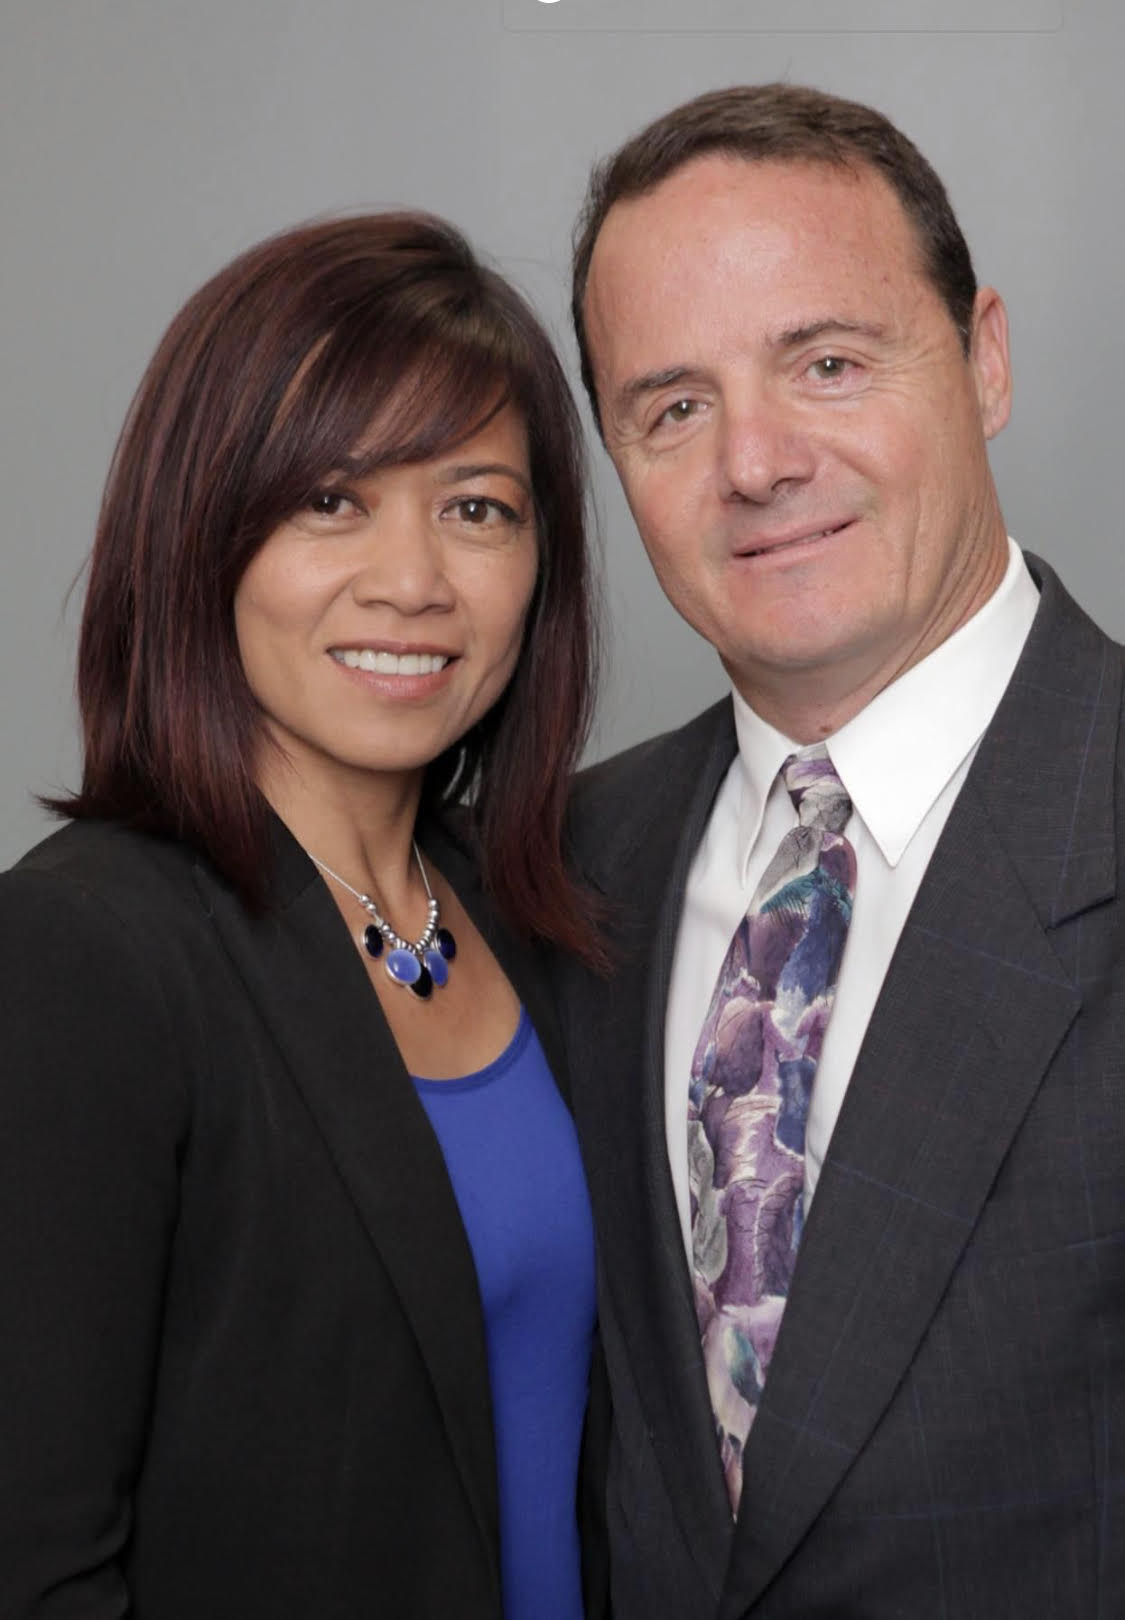 David & Celina Tomlin
Financial Professional
Prolific Leadership Development